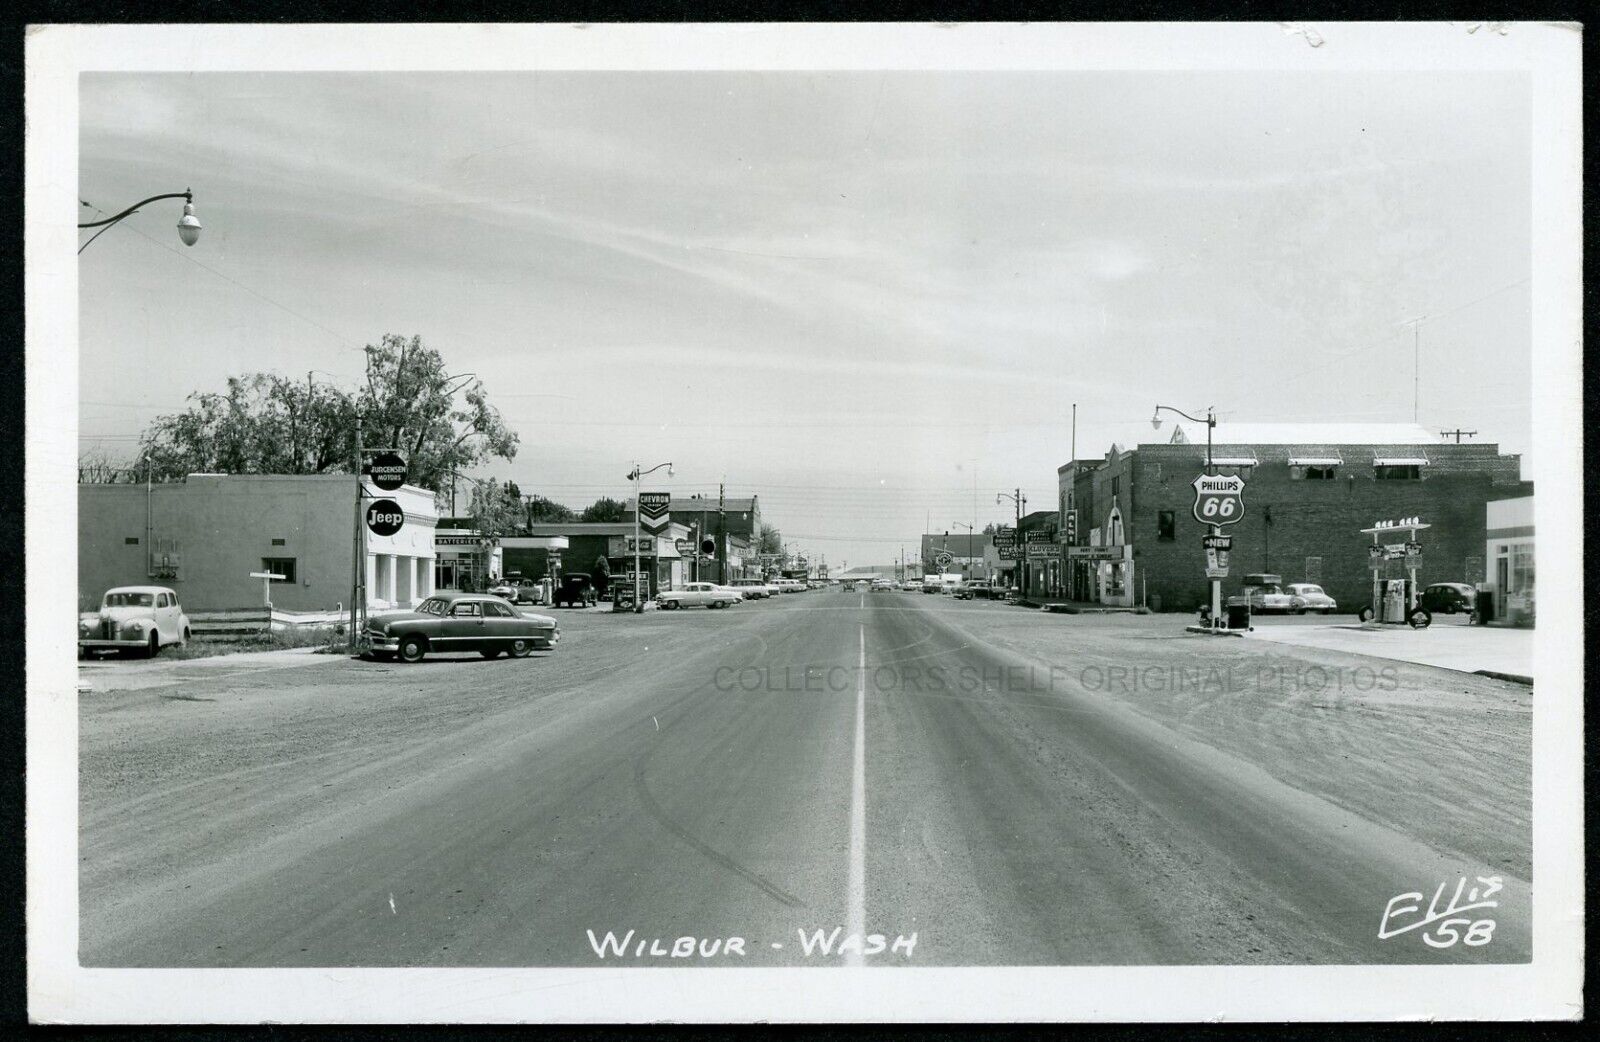 WILBUR WASHINGTON - STREET VIEW - 1950s RPPC RP Photo Postcard by ELLIS #58